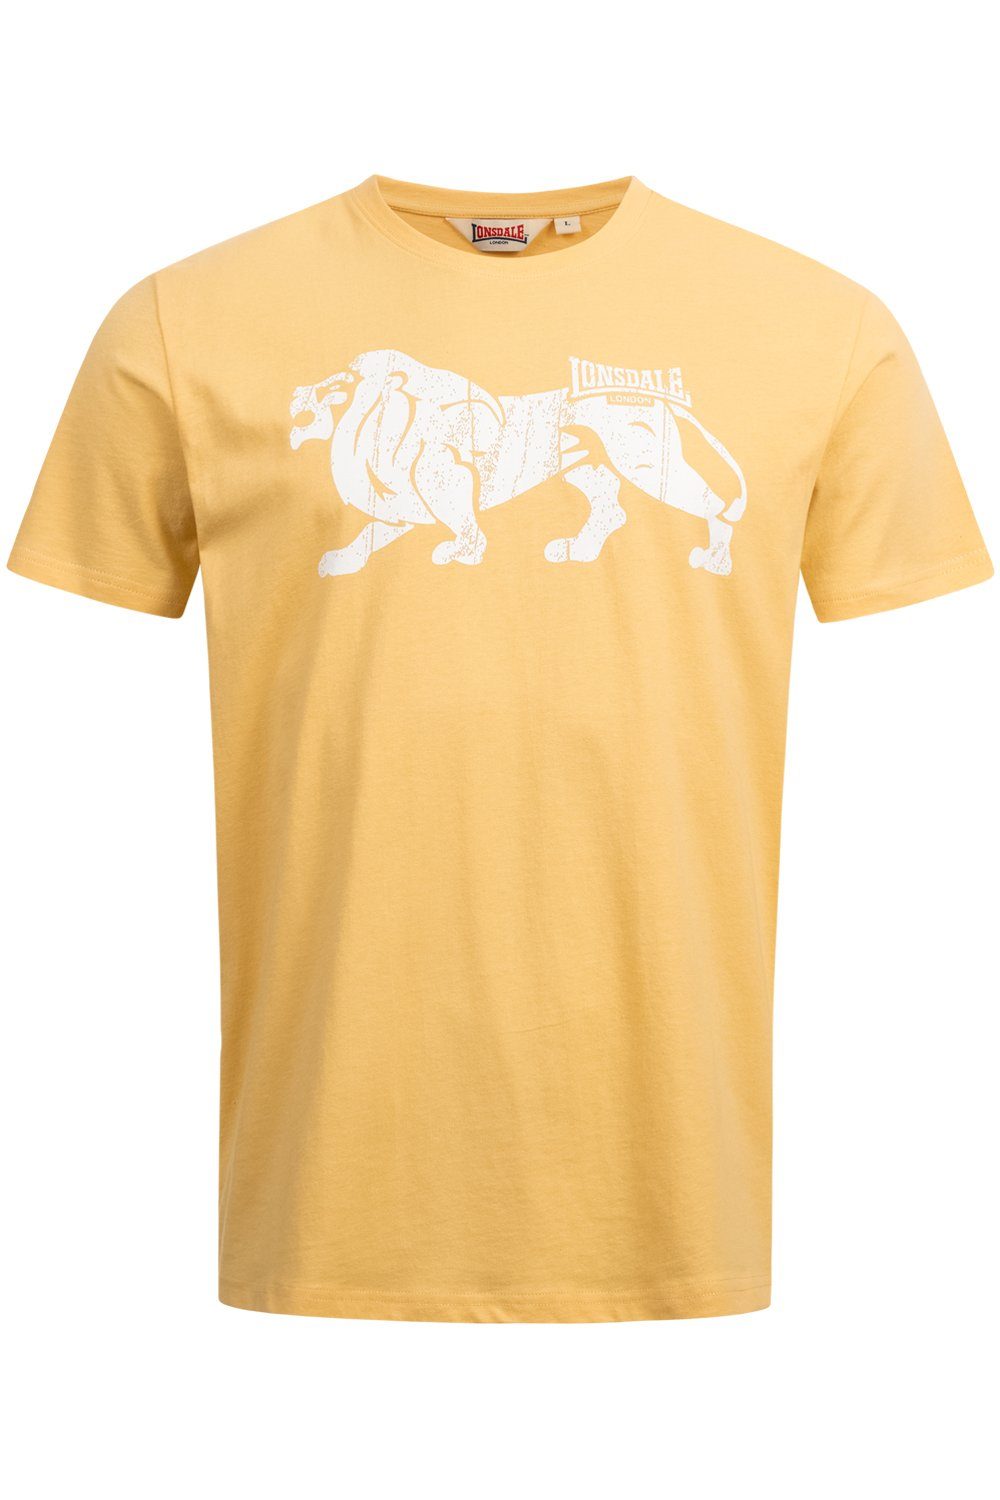 Lonsdale T-Shirt ENDMOOR Pastel Yellow/White